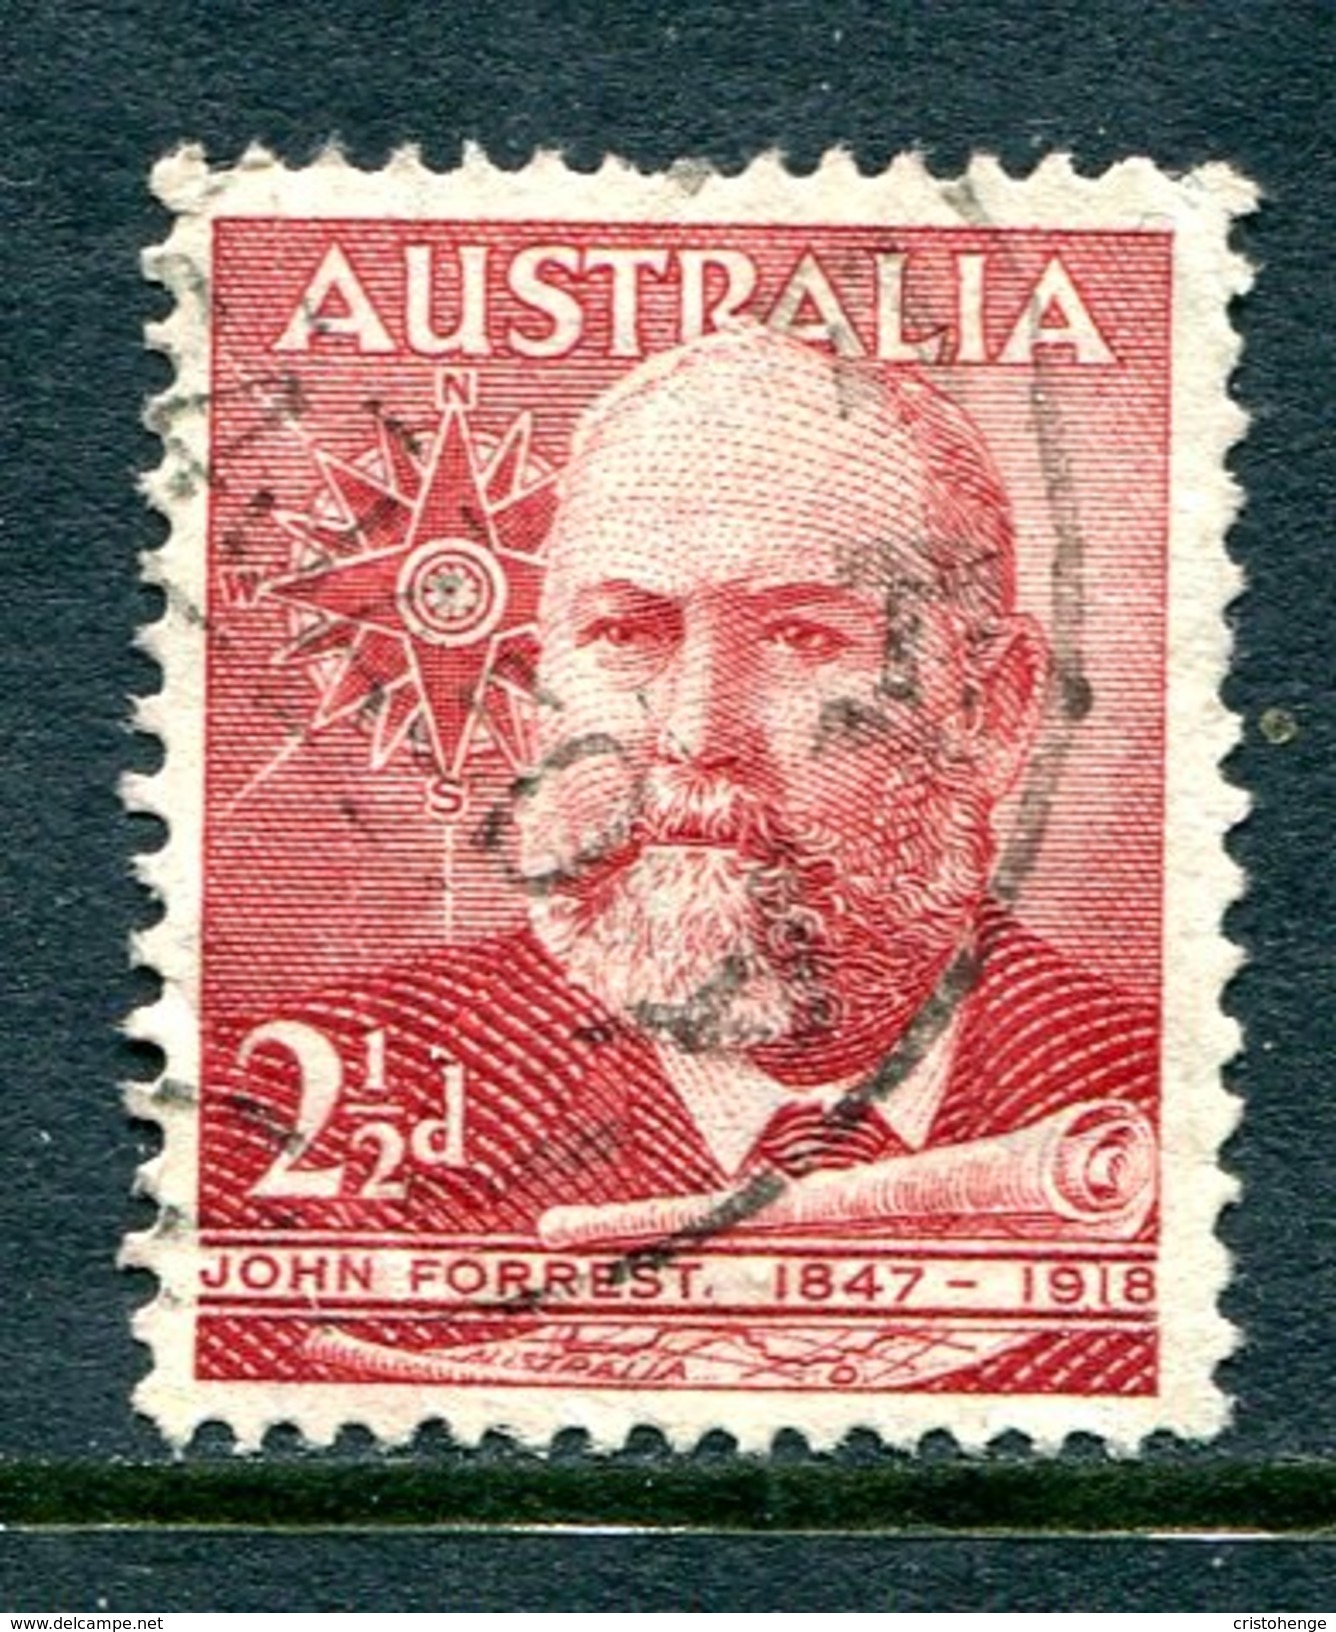 Australia 1949 John Ford Of Bunbury Commemoration Used (SG 233) - Used Stamps